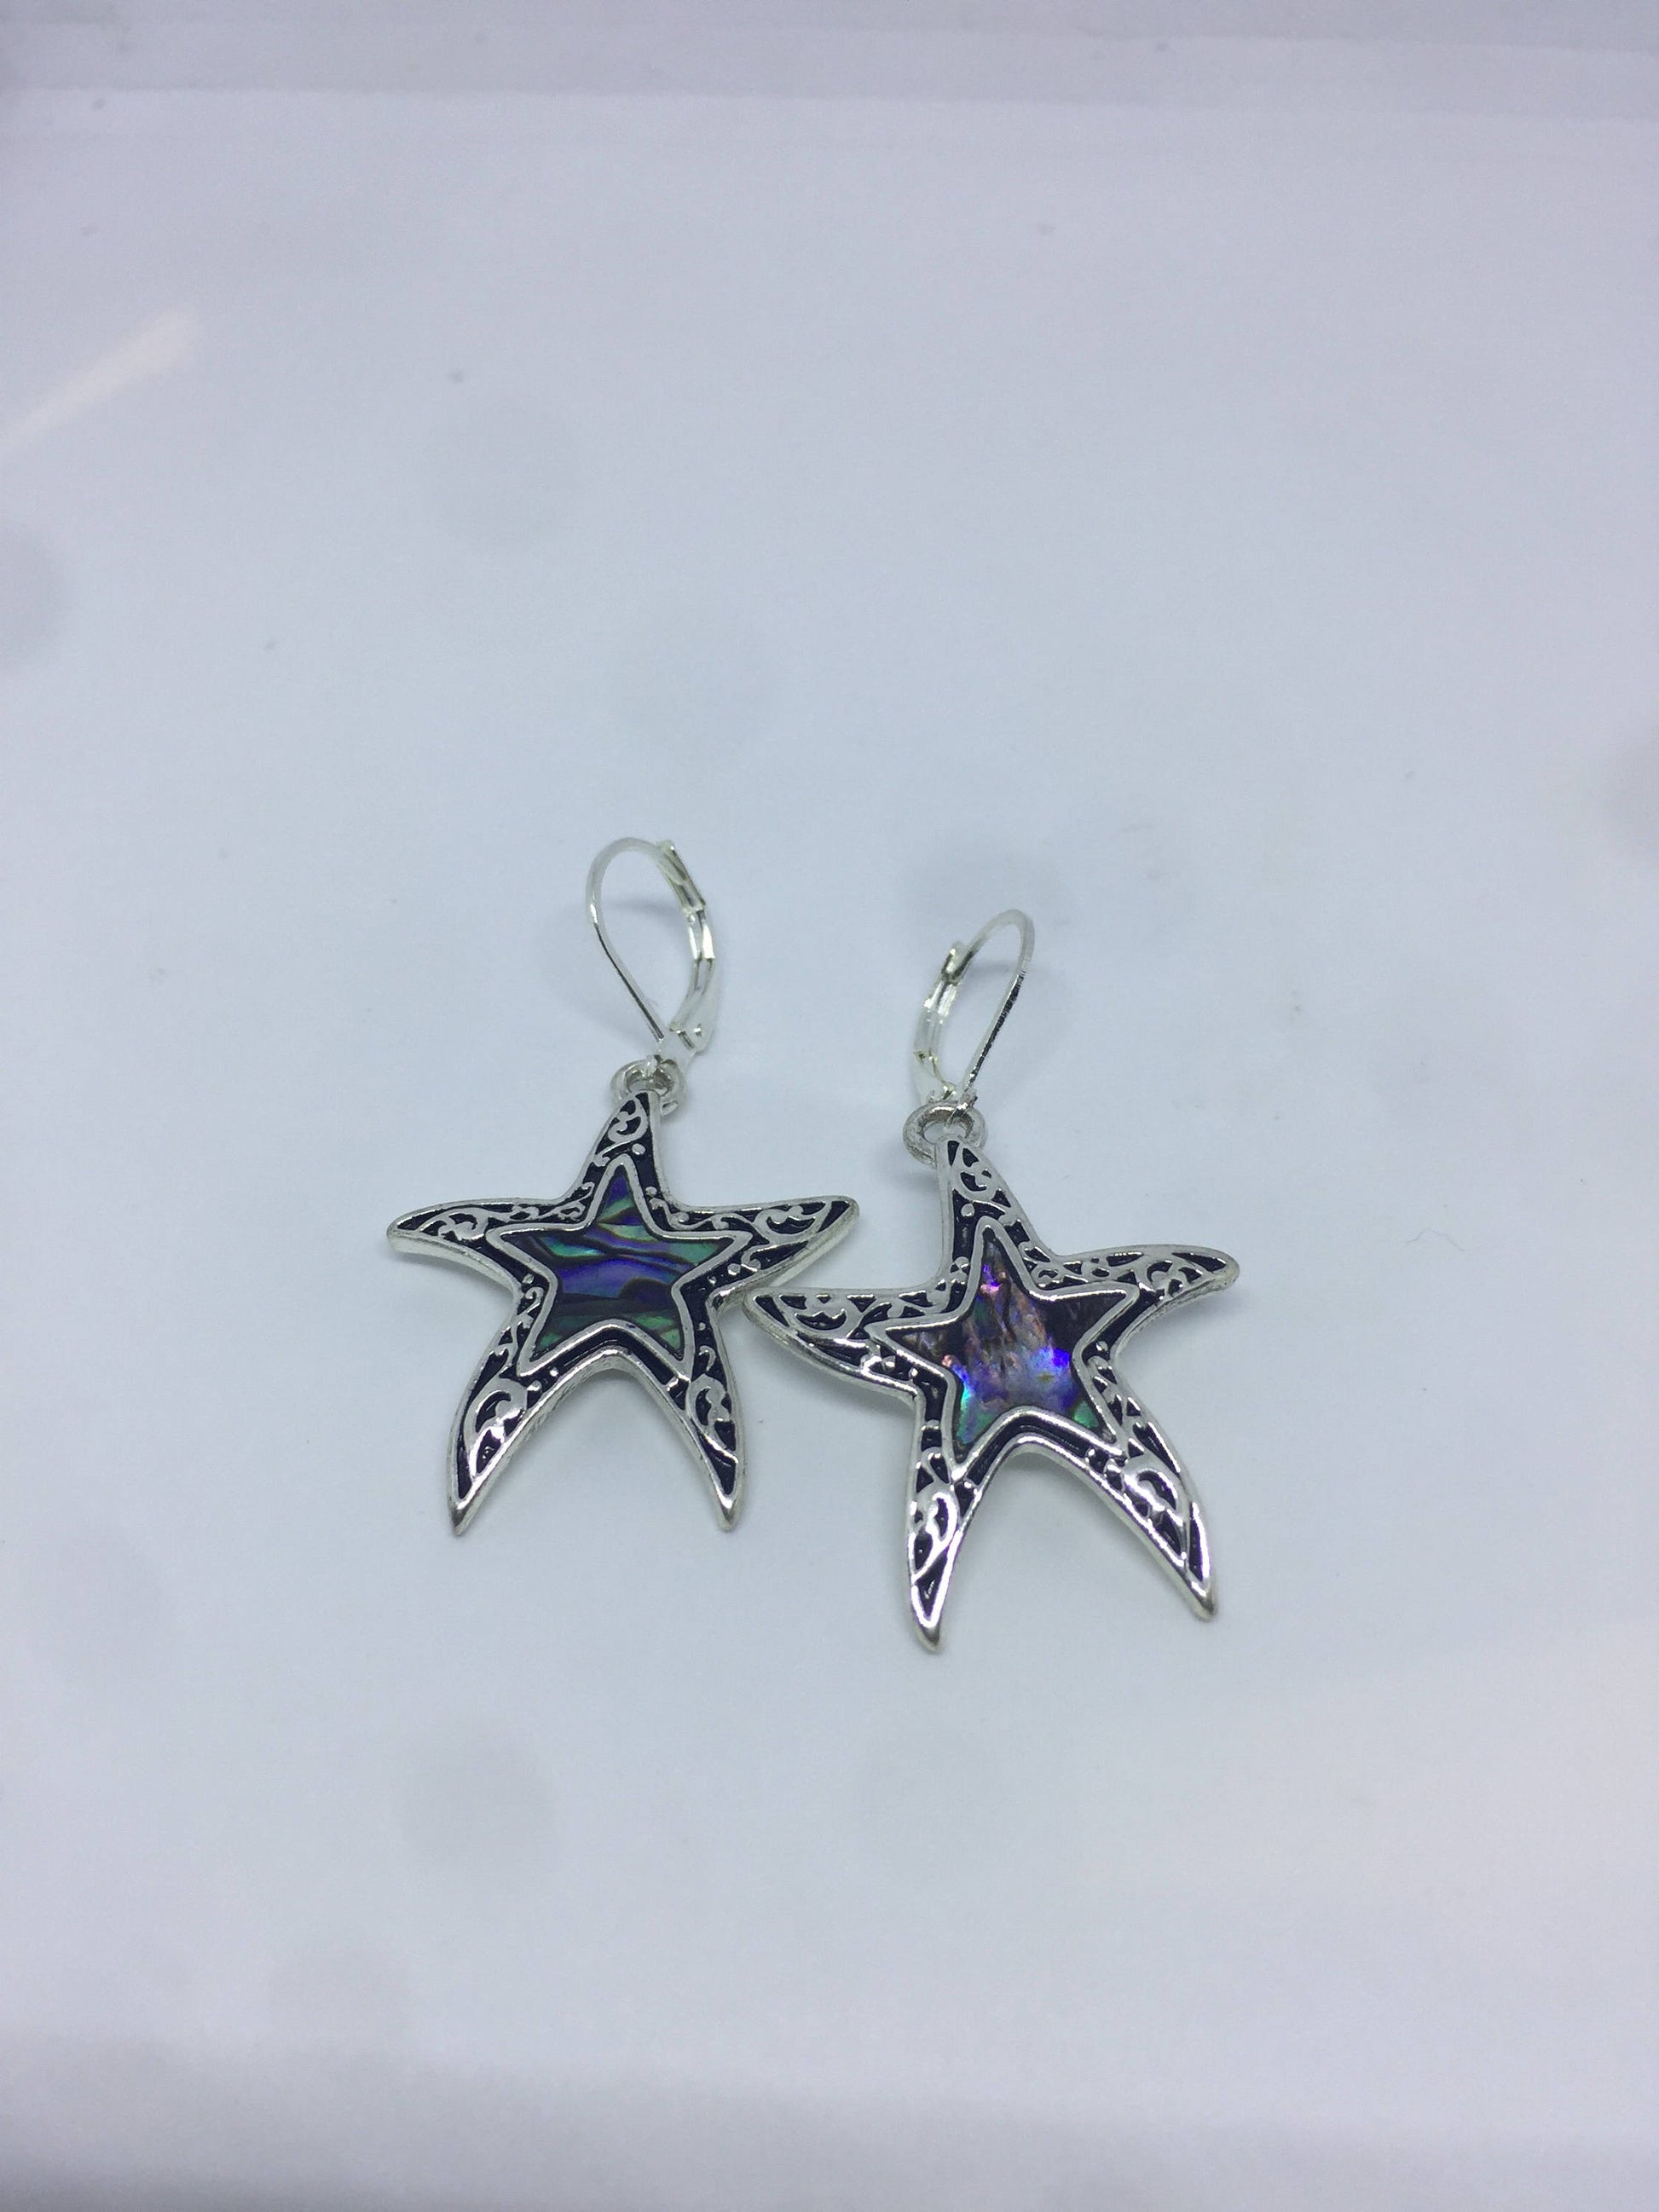 Vintage Handmade Silver Star Fish Rainbow Abalone Earrings